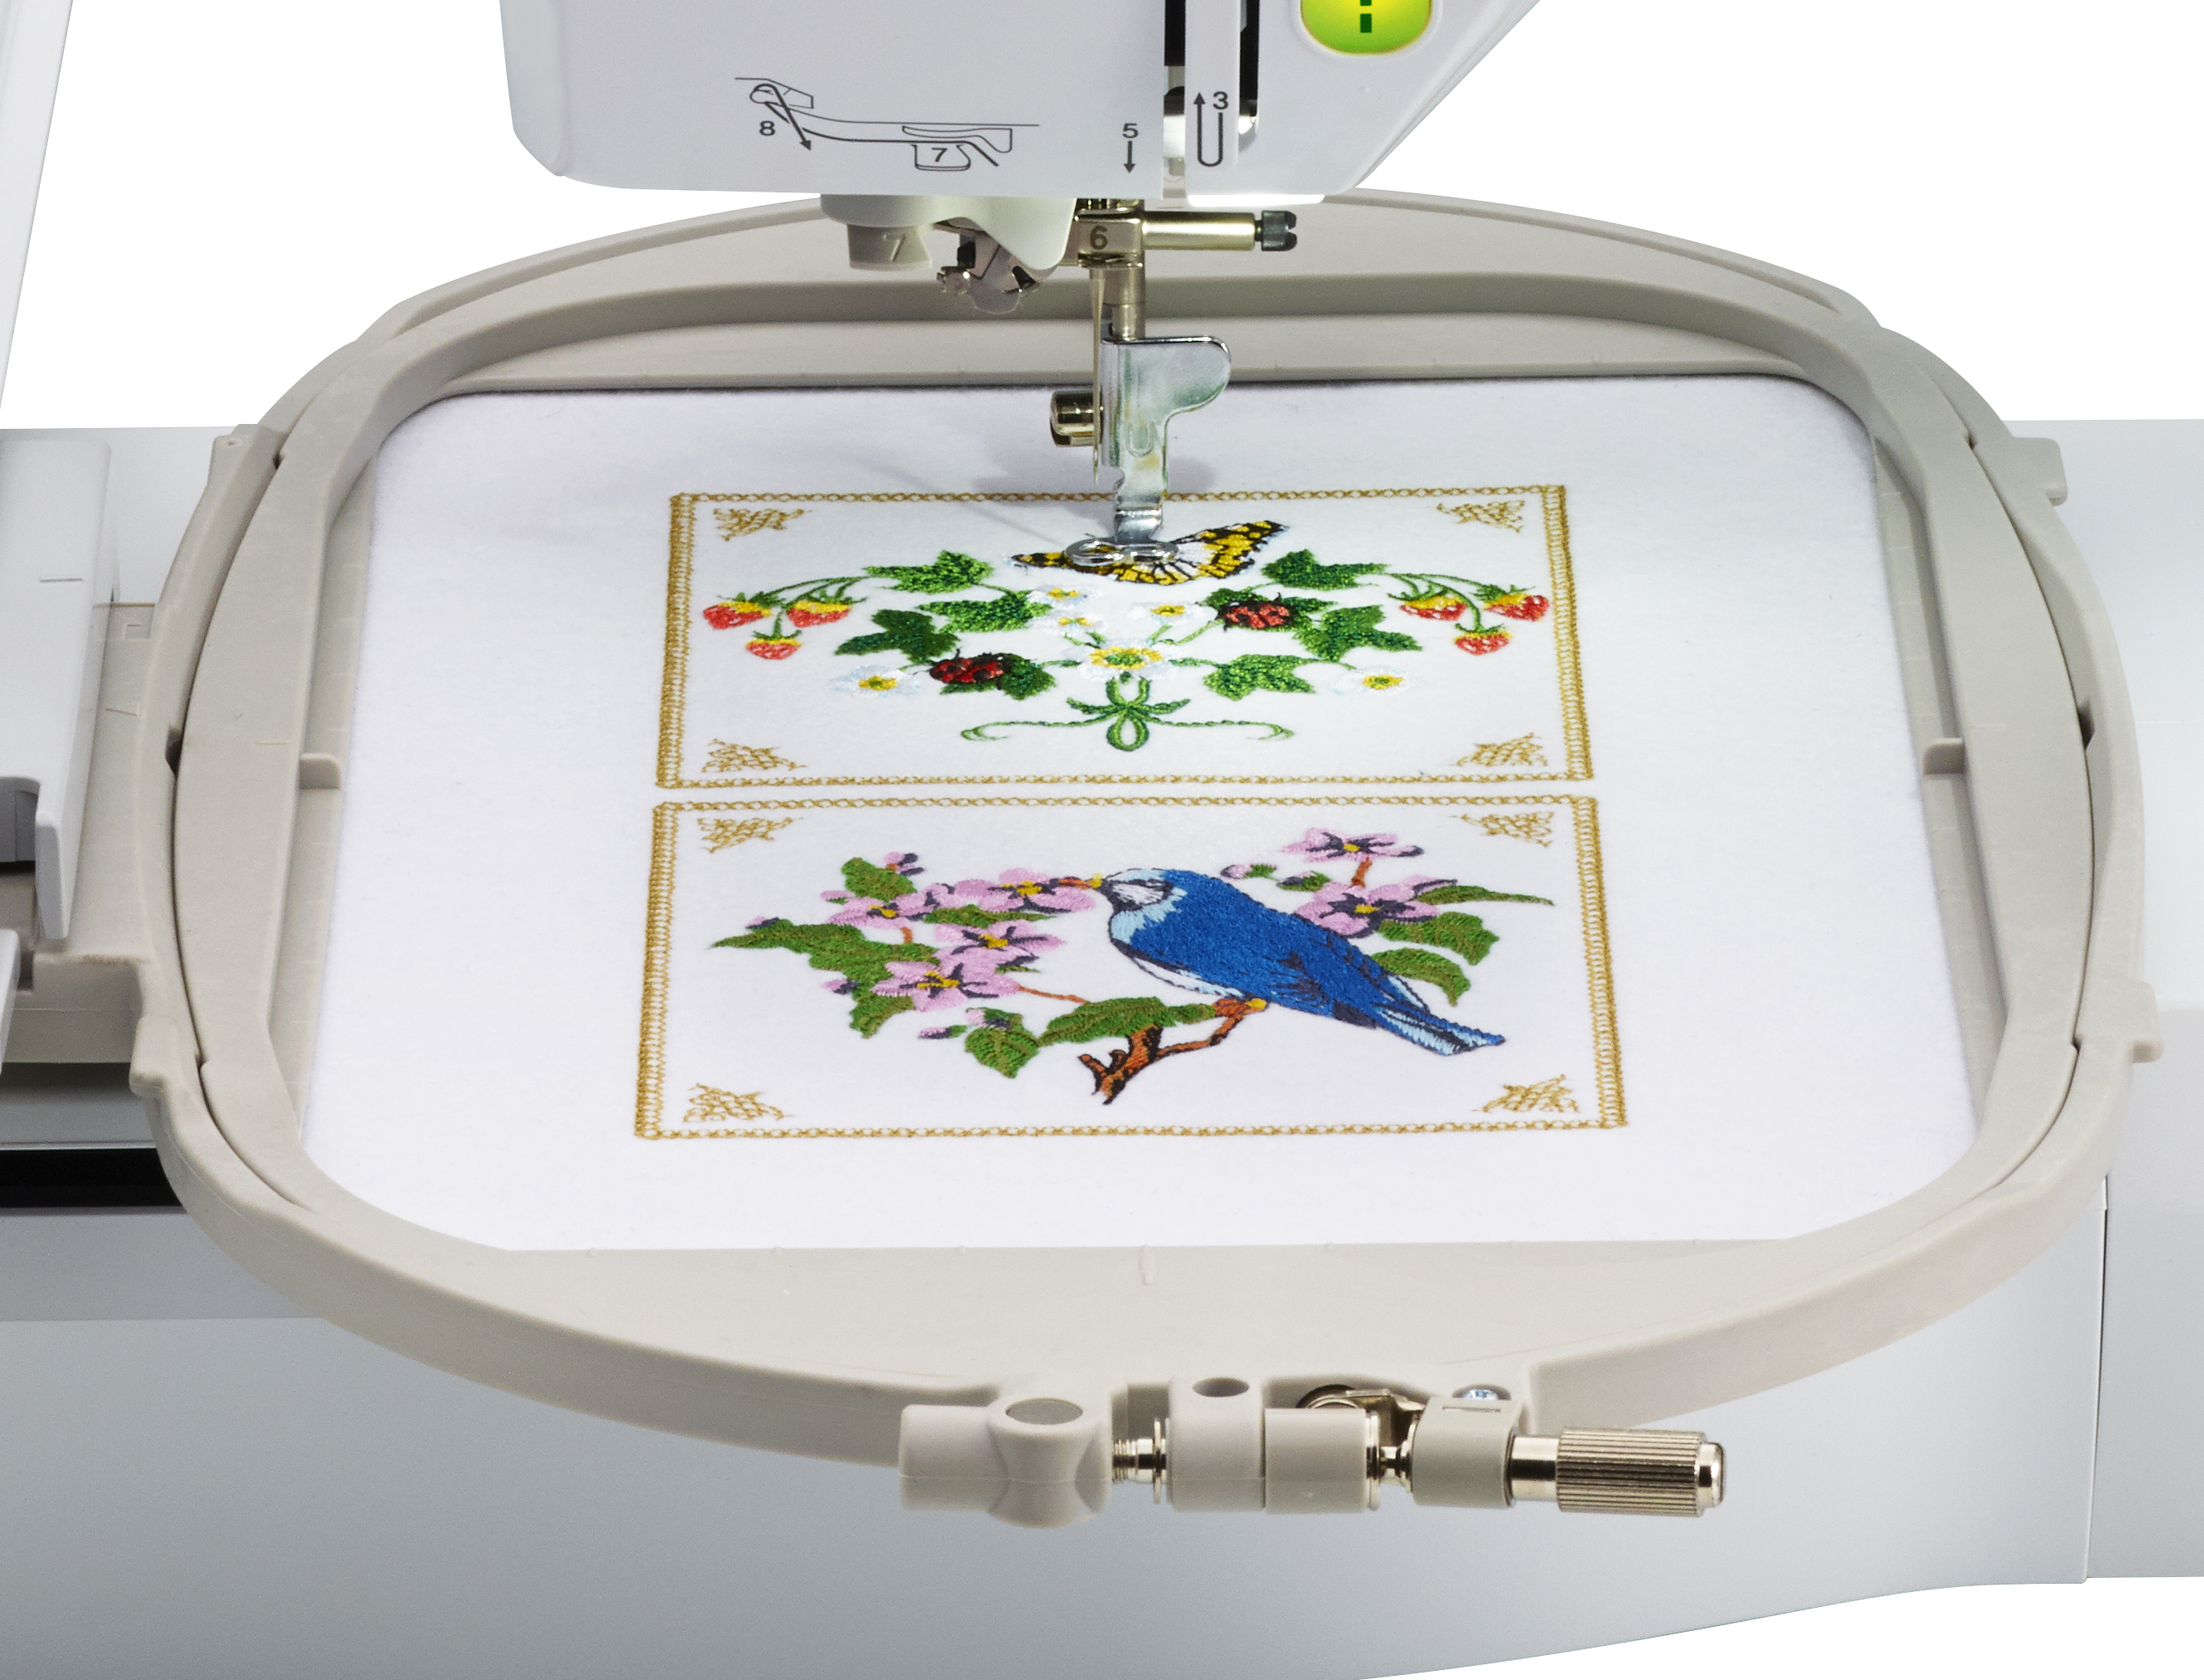 Brother Innov-ís NQ1600E Embroidery Machine w/Color Screen 6 x 10 Inch Embroidery Area USB Port 